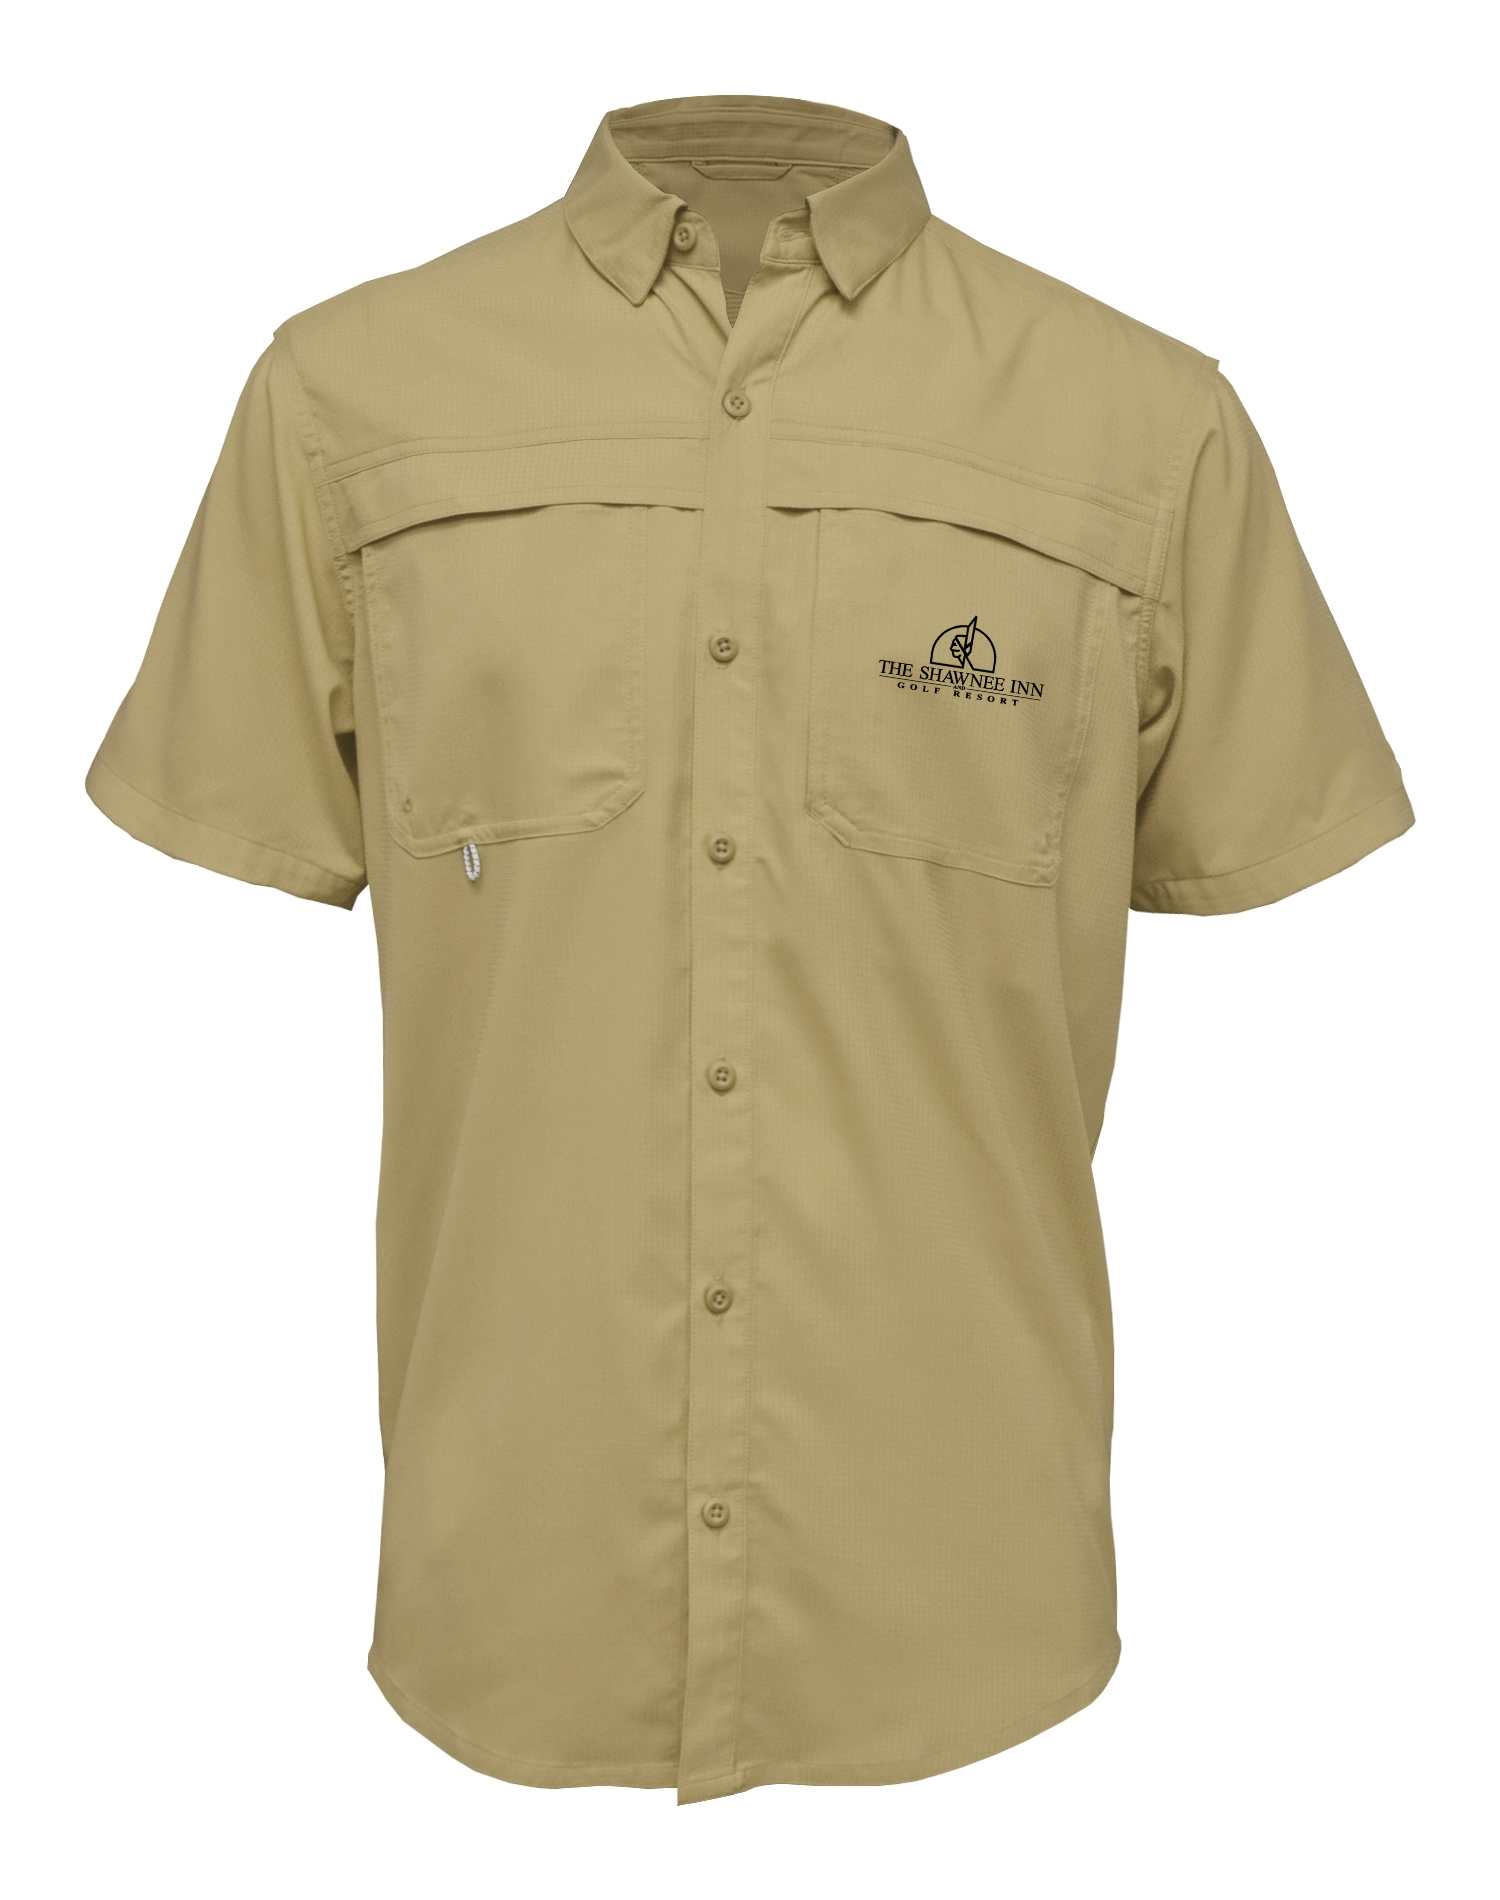 BAW Athletic Wear 3100 - Adult Short Sleeve Fishing Shirt